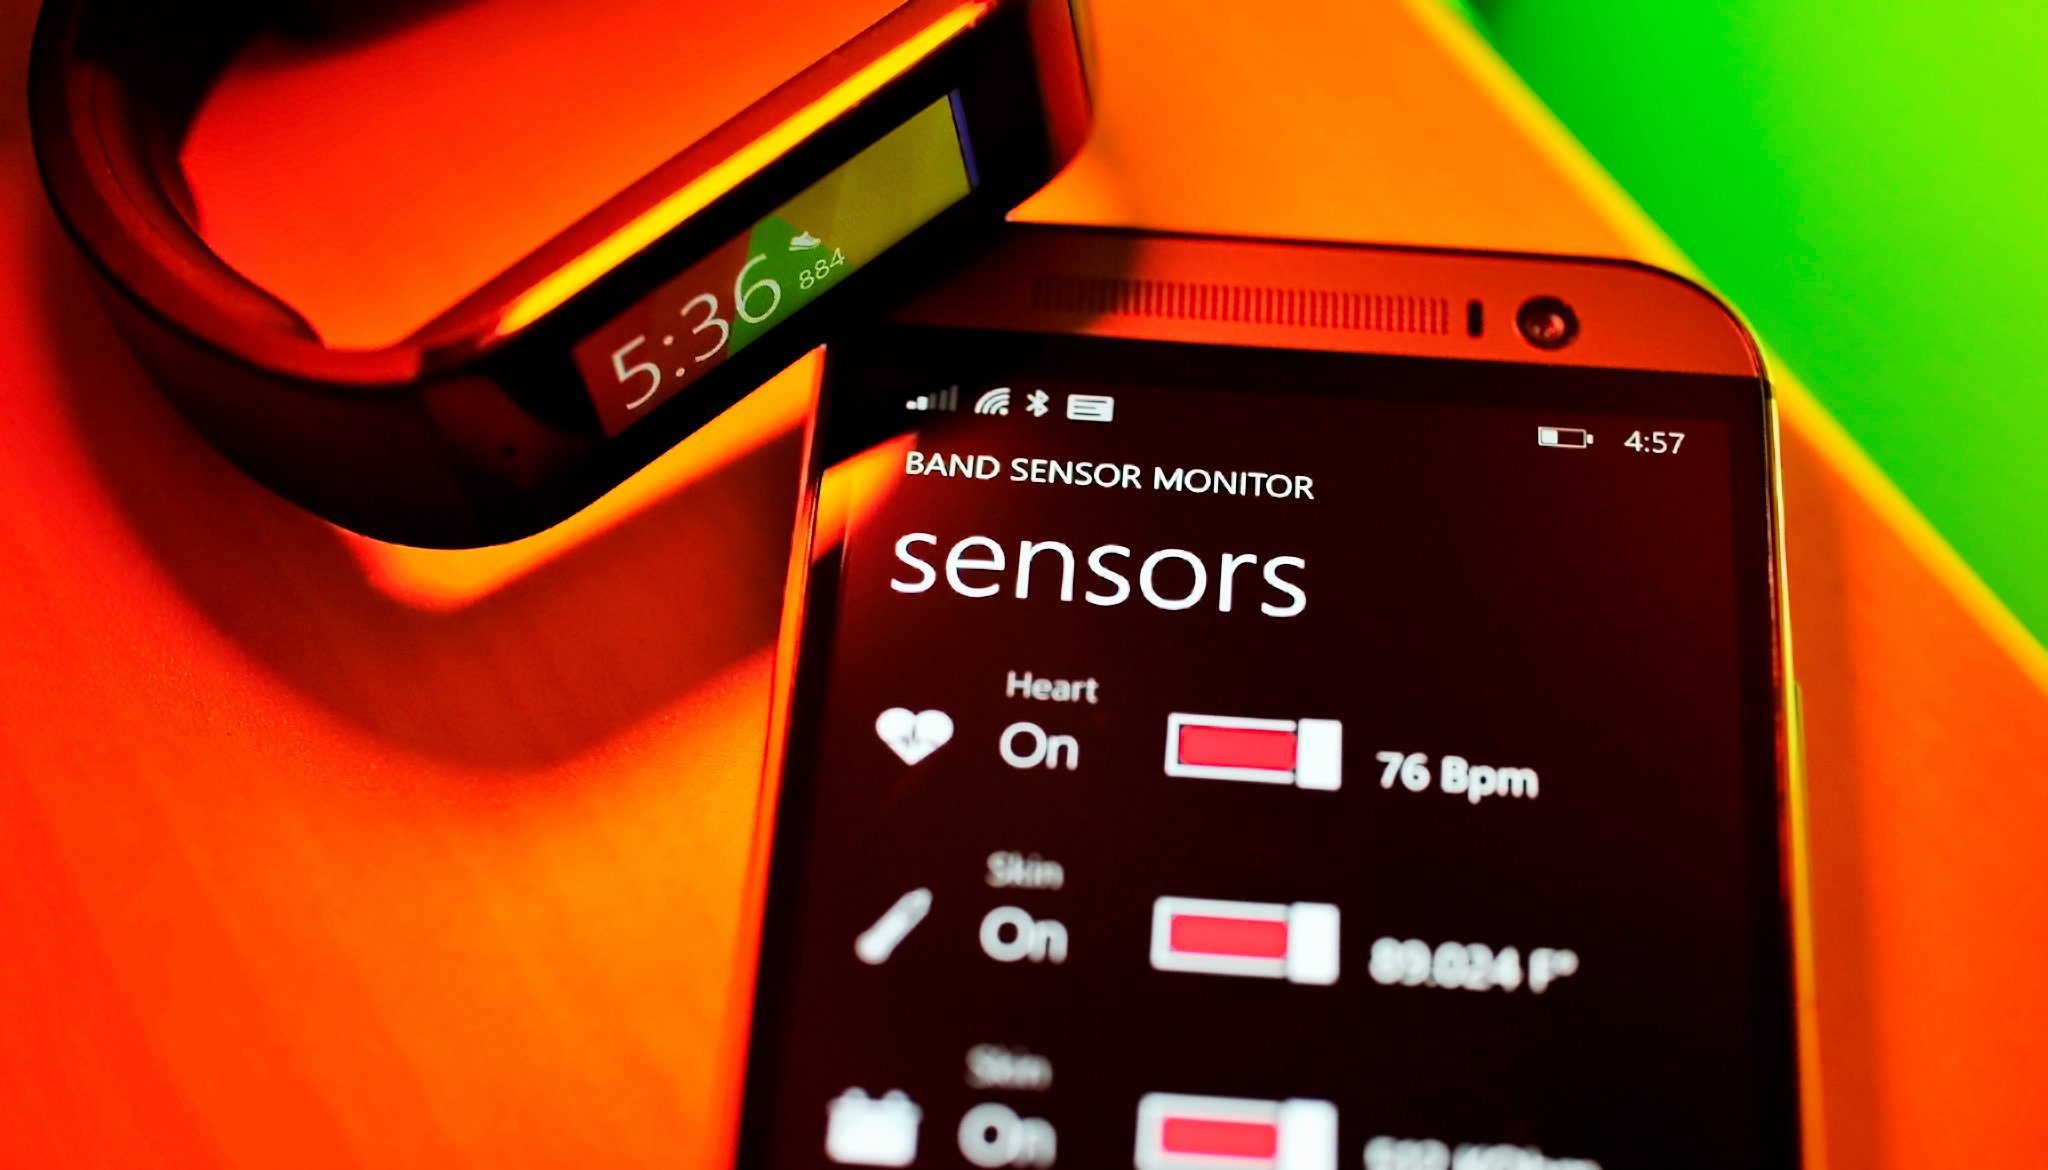 Band Sensor Monitor for Microsoft Band